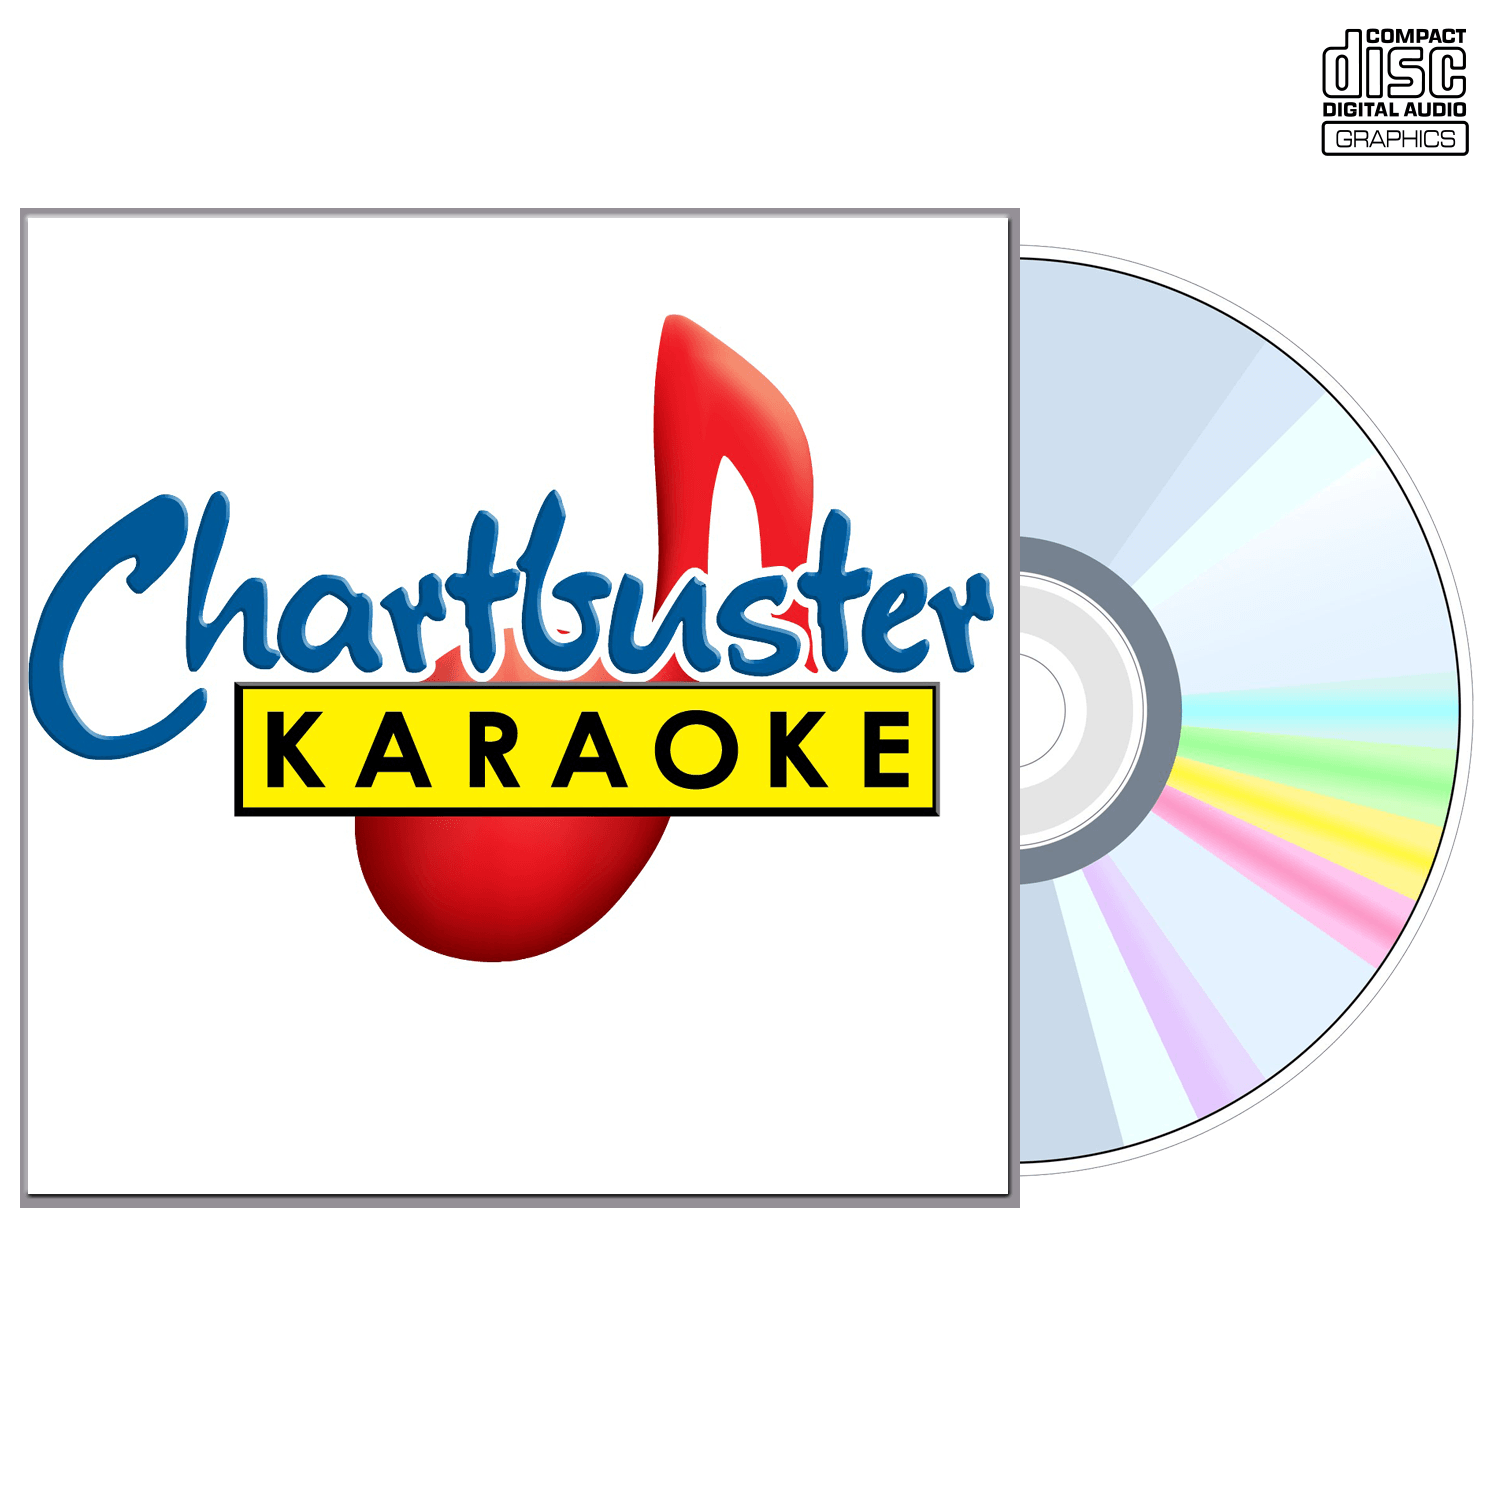 Johnny Paycheck - CD+G - Chartbuster Karaoke - Karaoke Home Entertainment